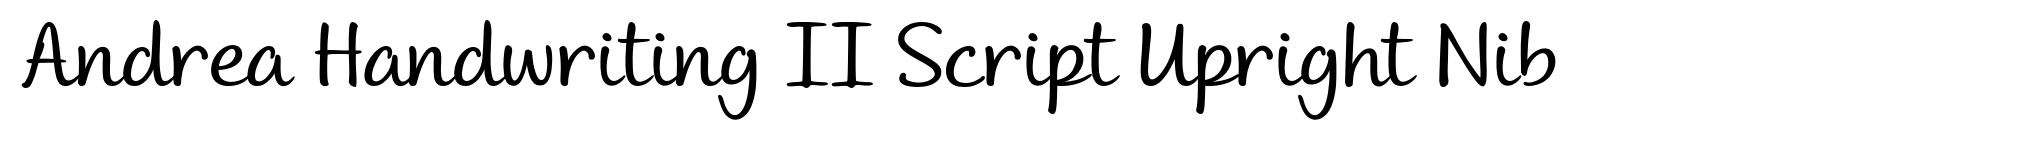 Andrea Handwriting II Script Upright Nib image